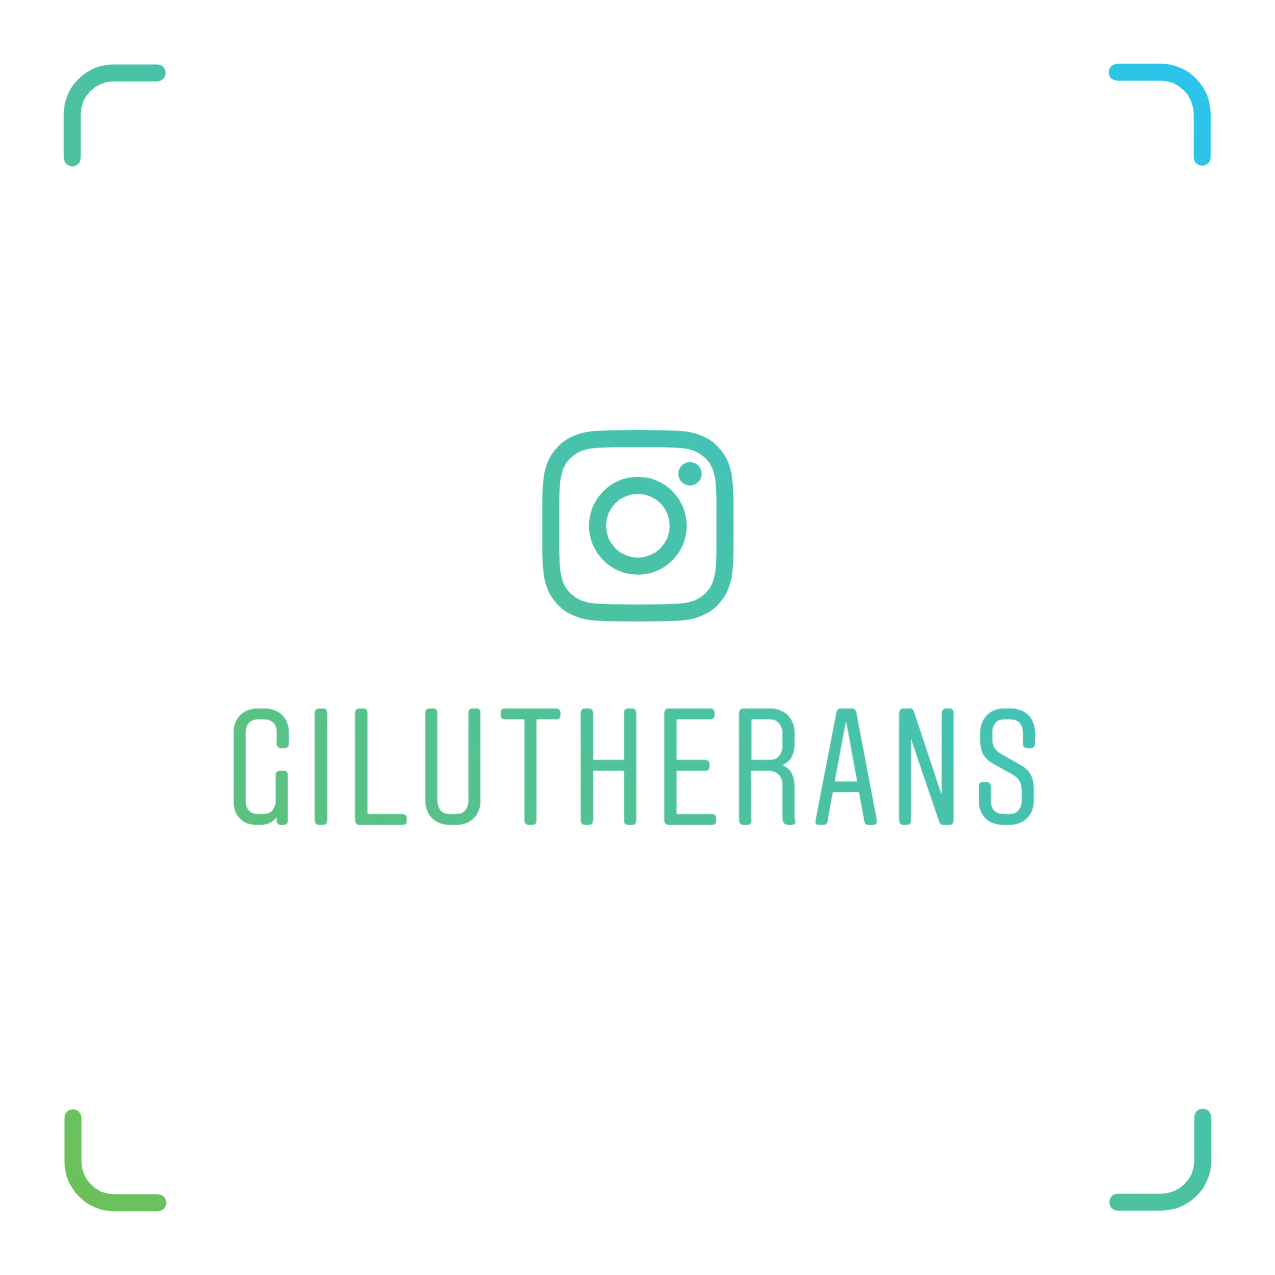 GILutherans Instagram